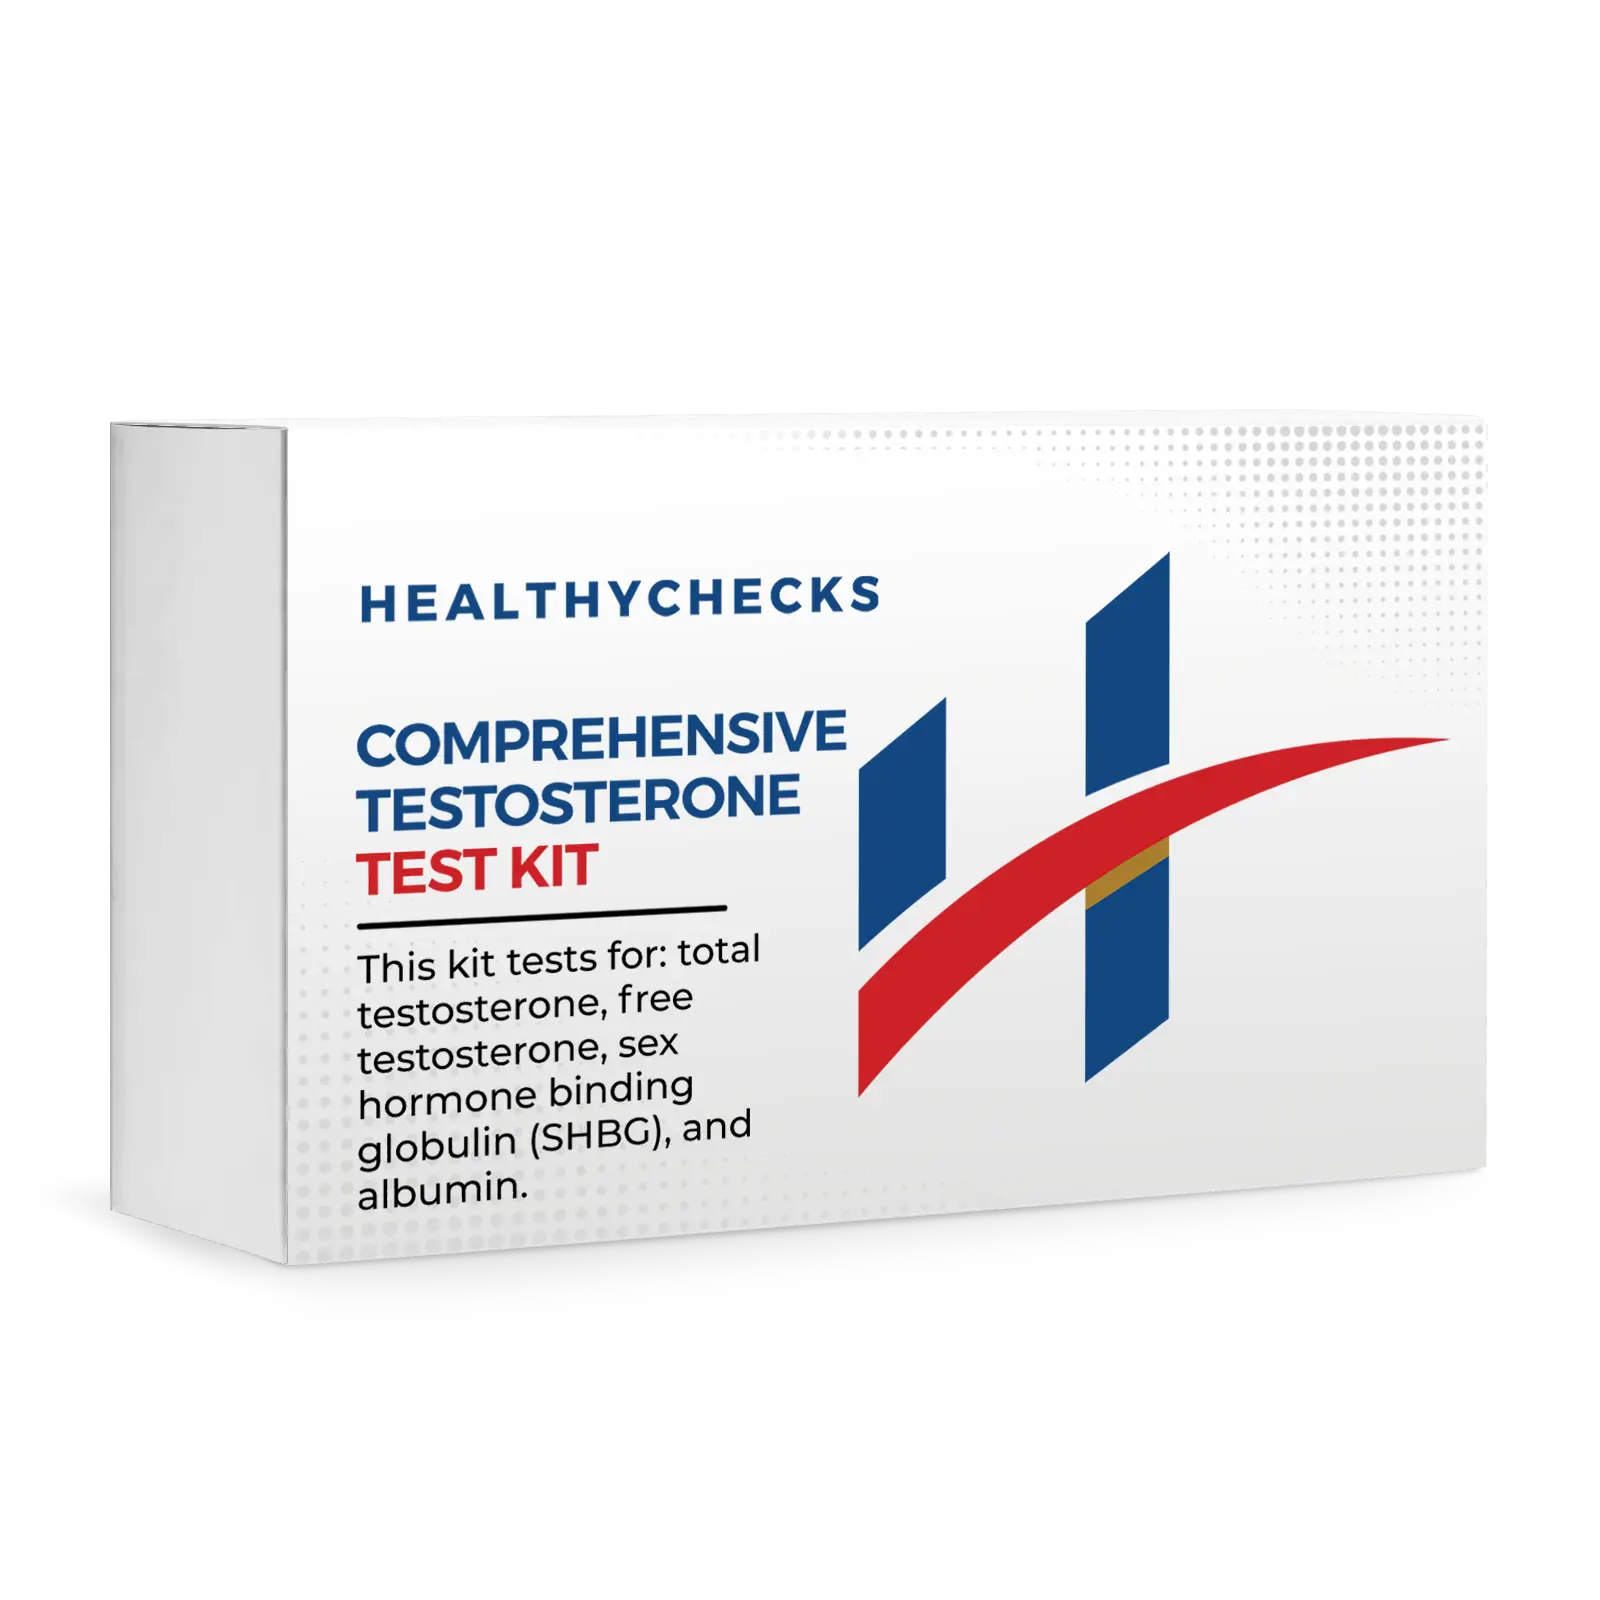 Comprehensive Testosterone Test - Male - HEALTHYCHECKS 